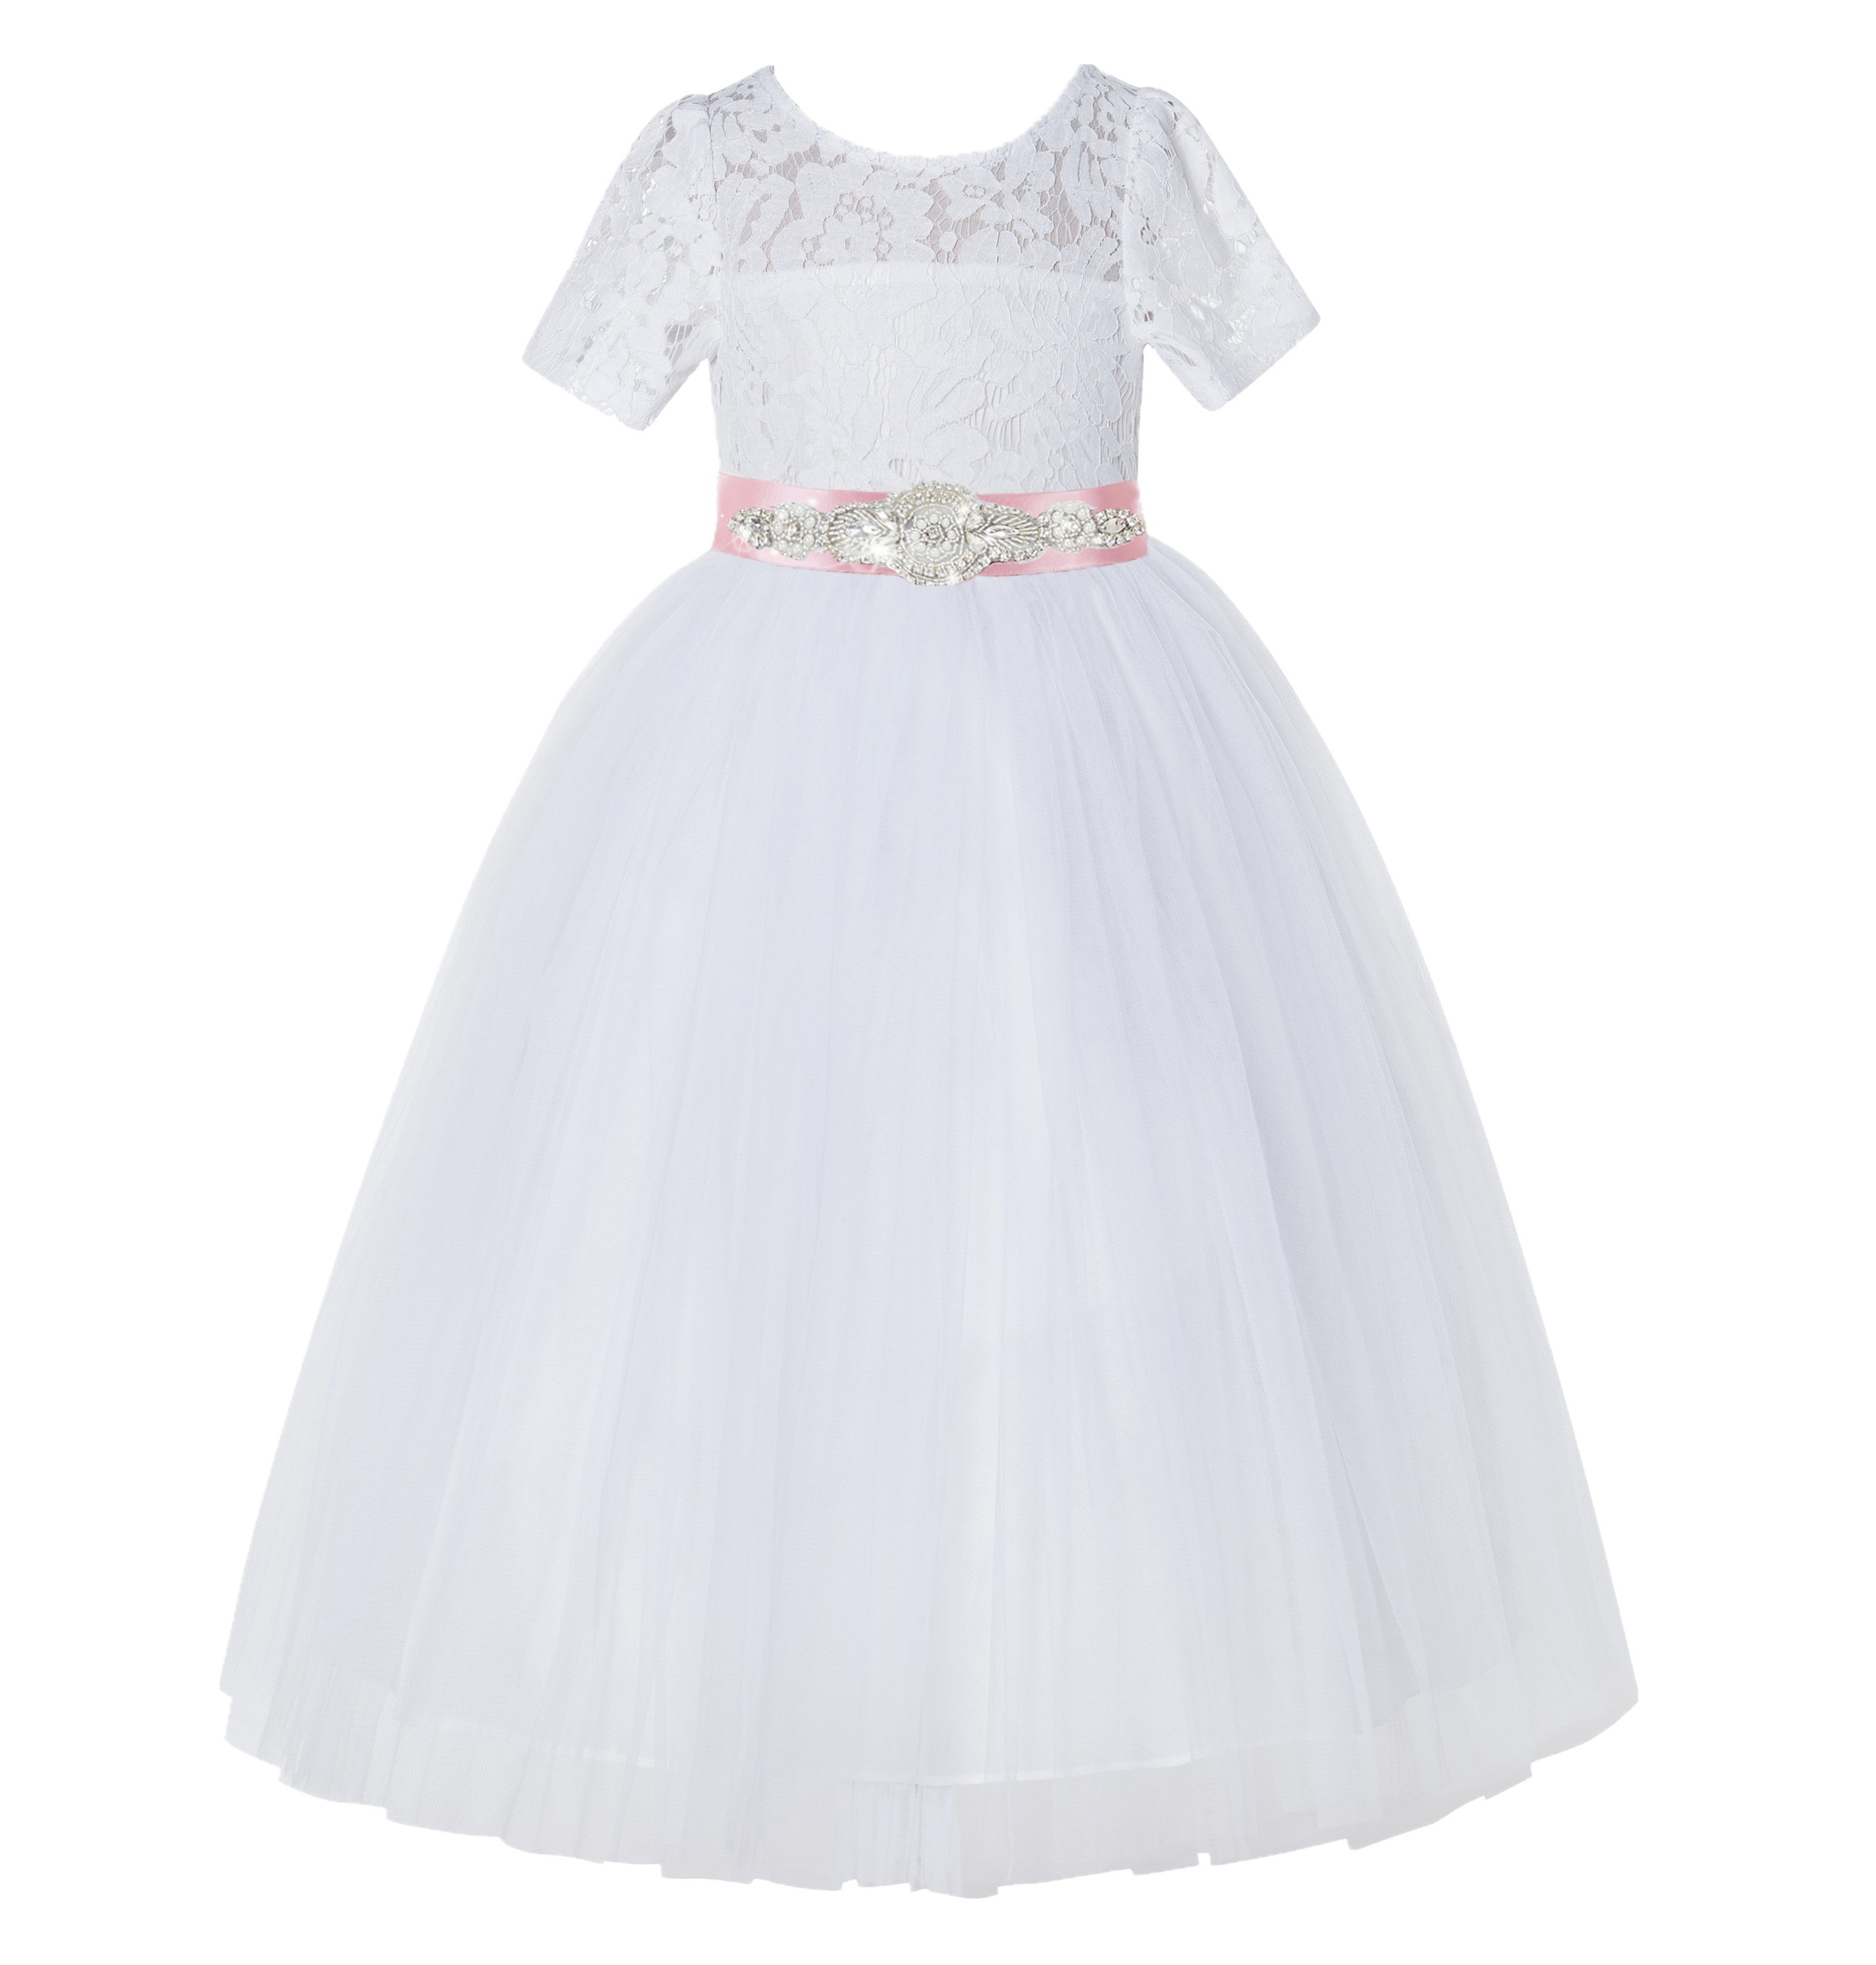 White / Dusty Rose Floral Lace Flower Girl Dress Vintage Dress LG2